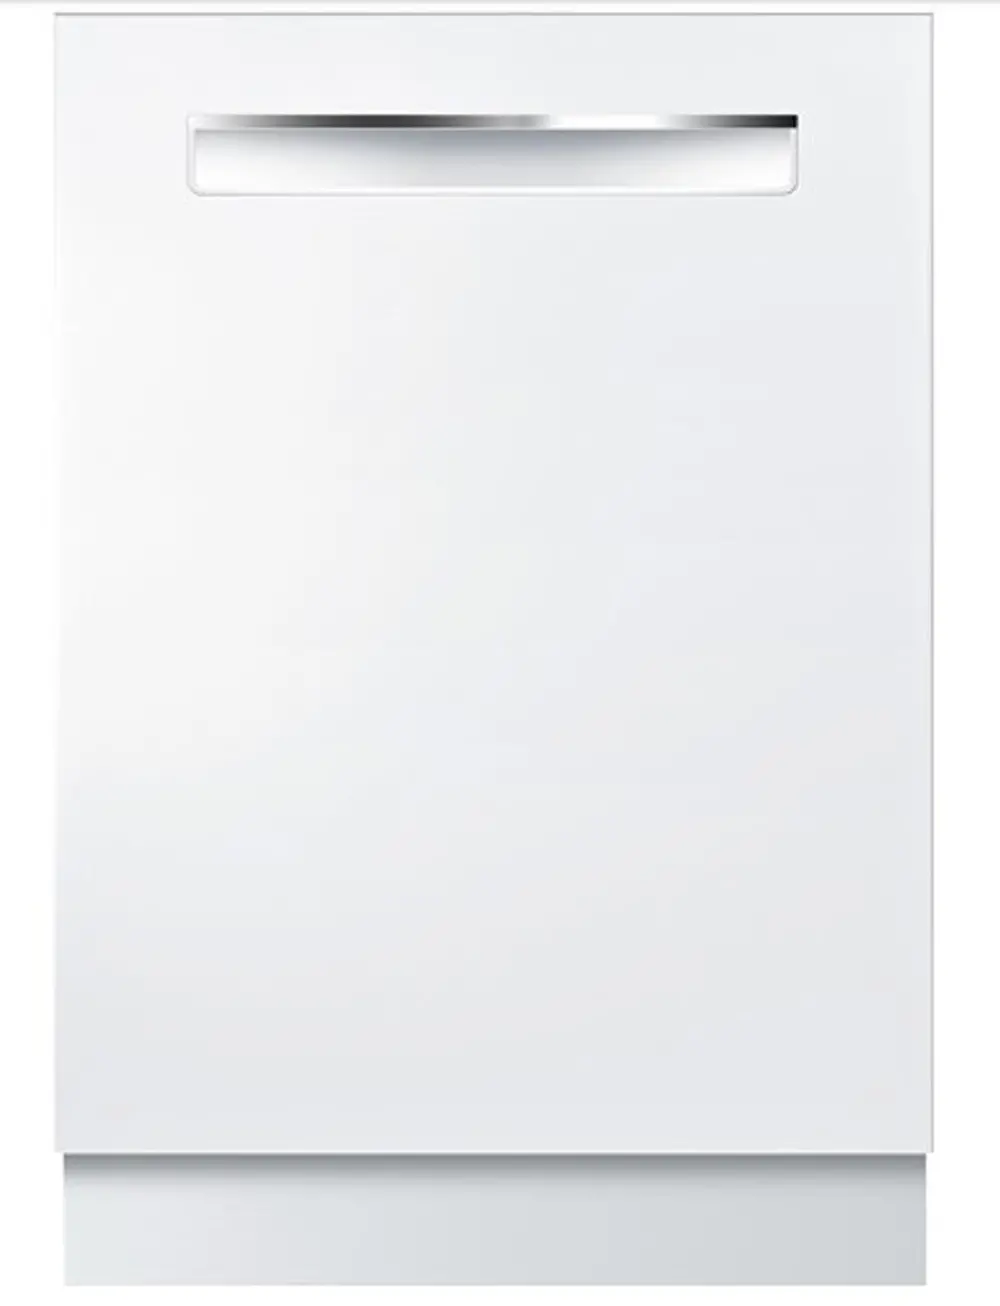 SHP65TL2UC Bosch 24 Inch White Dishwasher-1